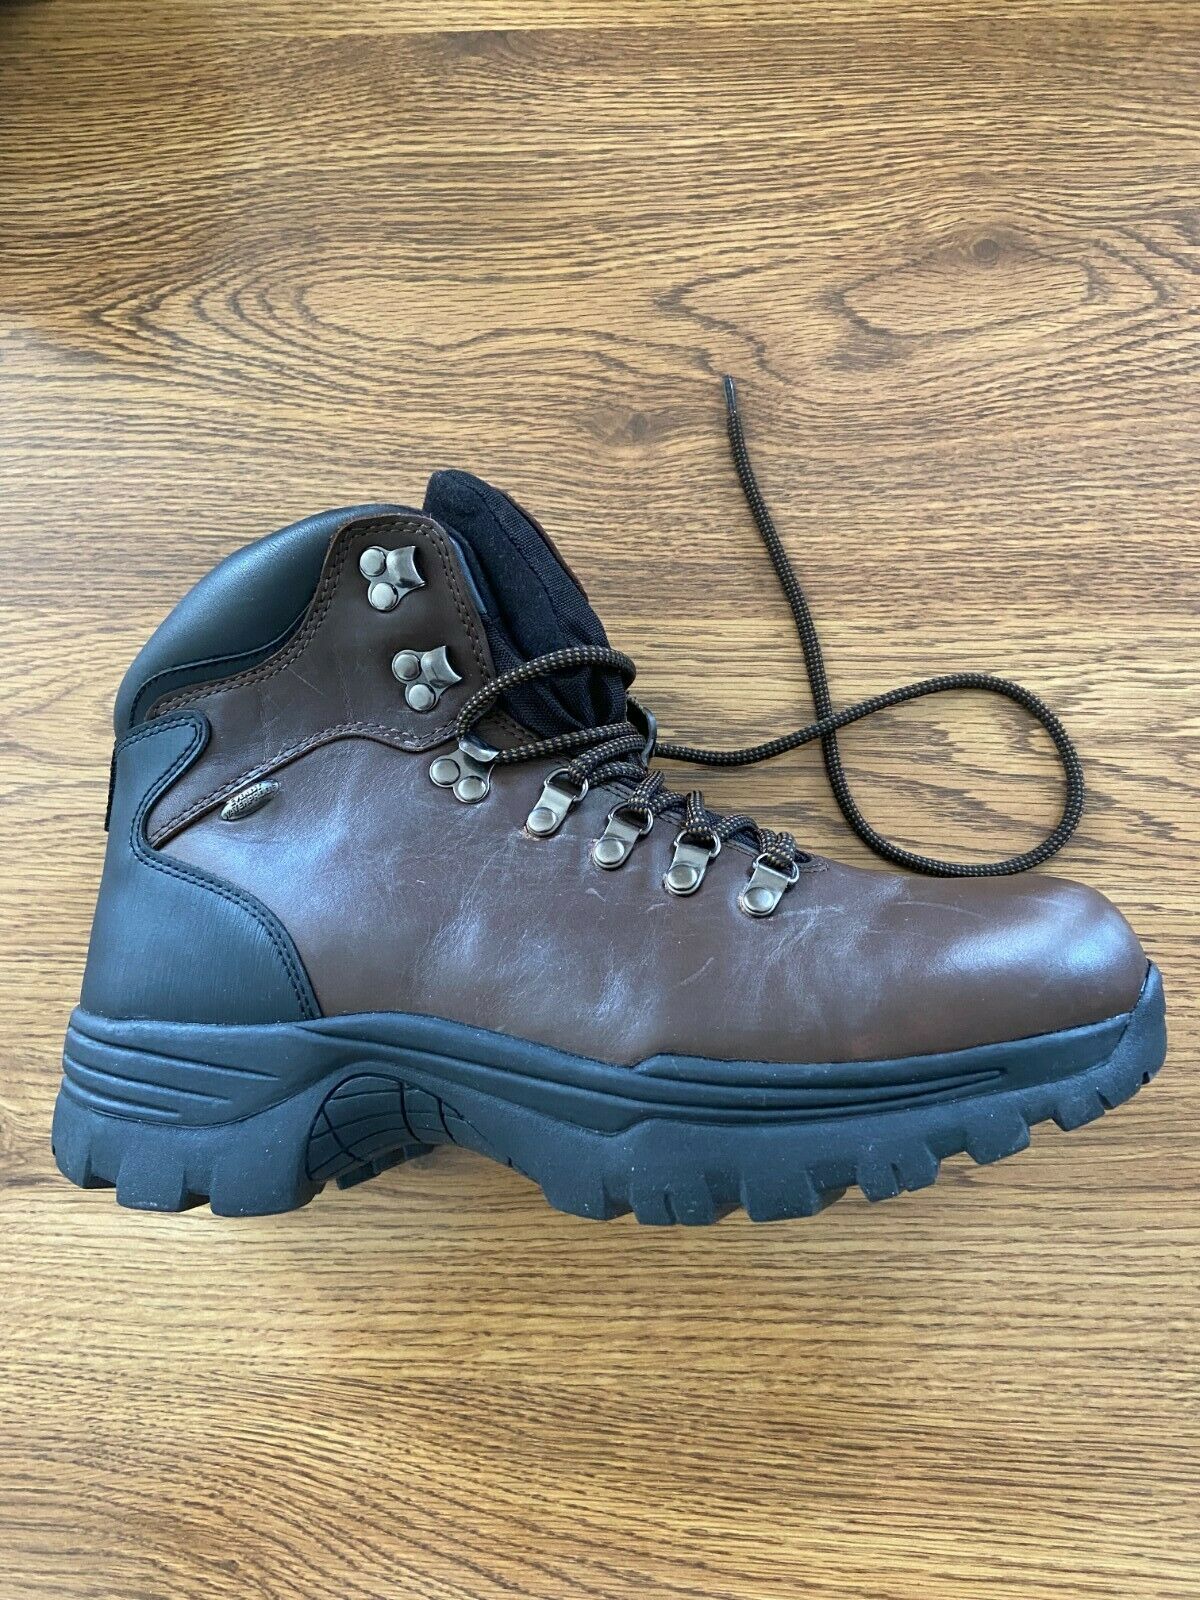 Everest Men's Jordan Brown Hiking Boots NIB Waterproof Size 12 M